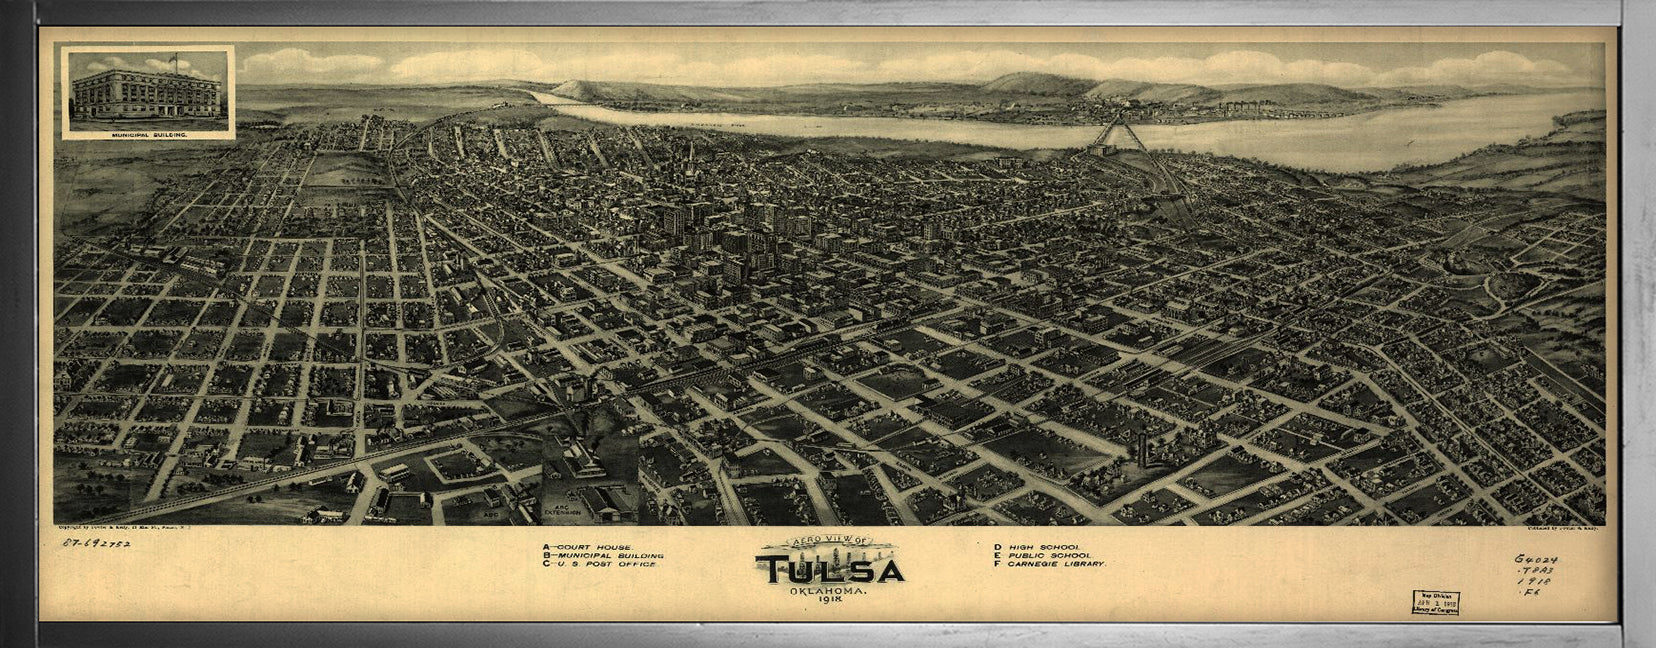 1918 Map|Title: Aero view of Tulsa, Oklahoma Vintage Historic Map